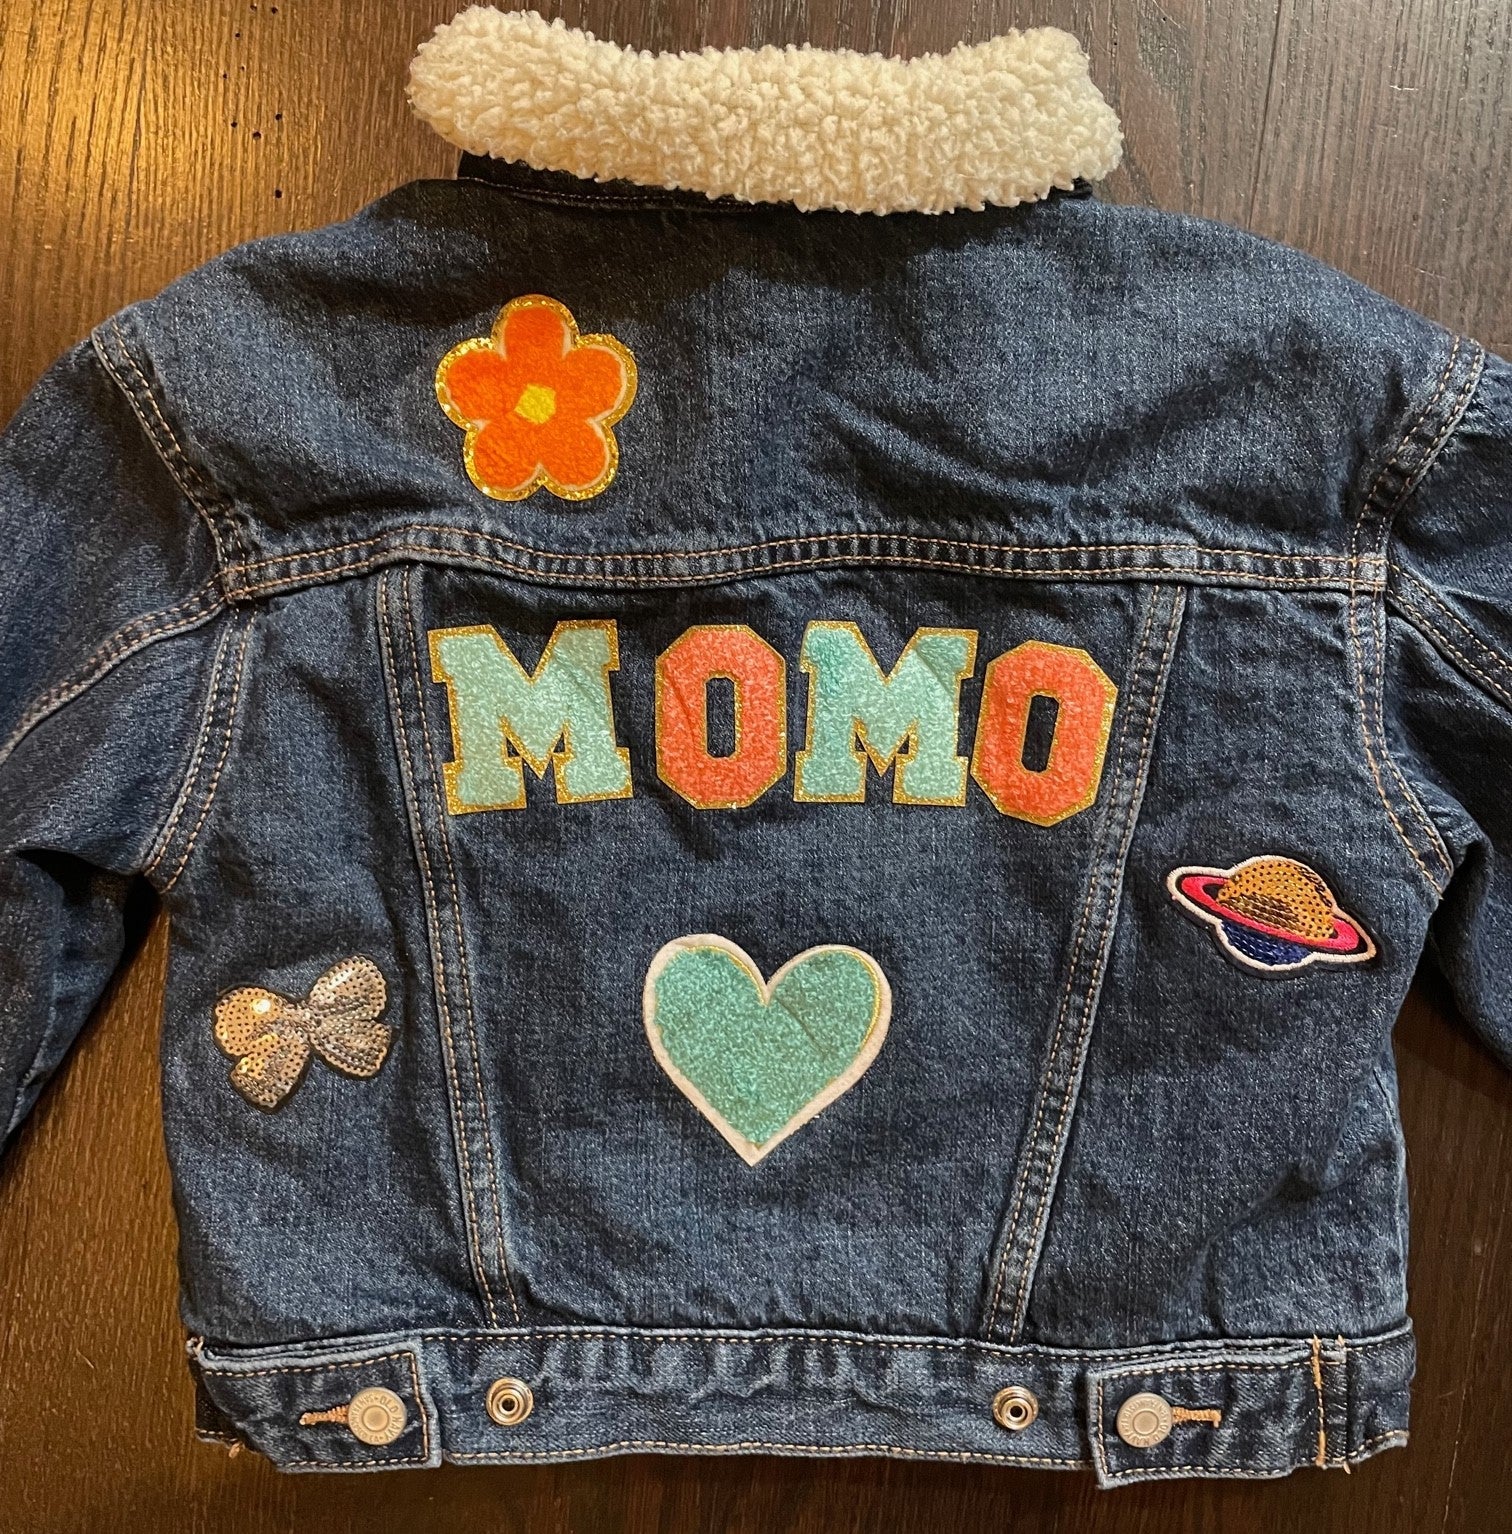 Baby Hand Painted Denim Jacket - Details and Swirls